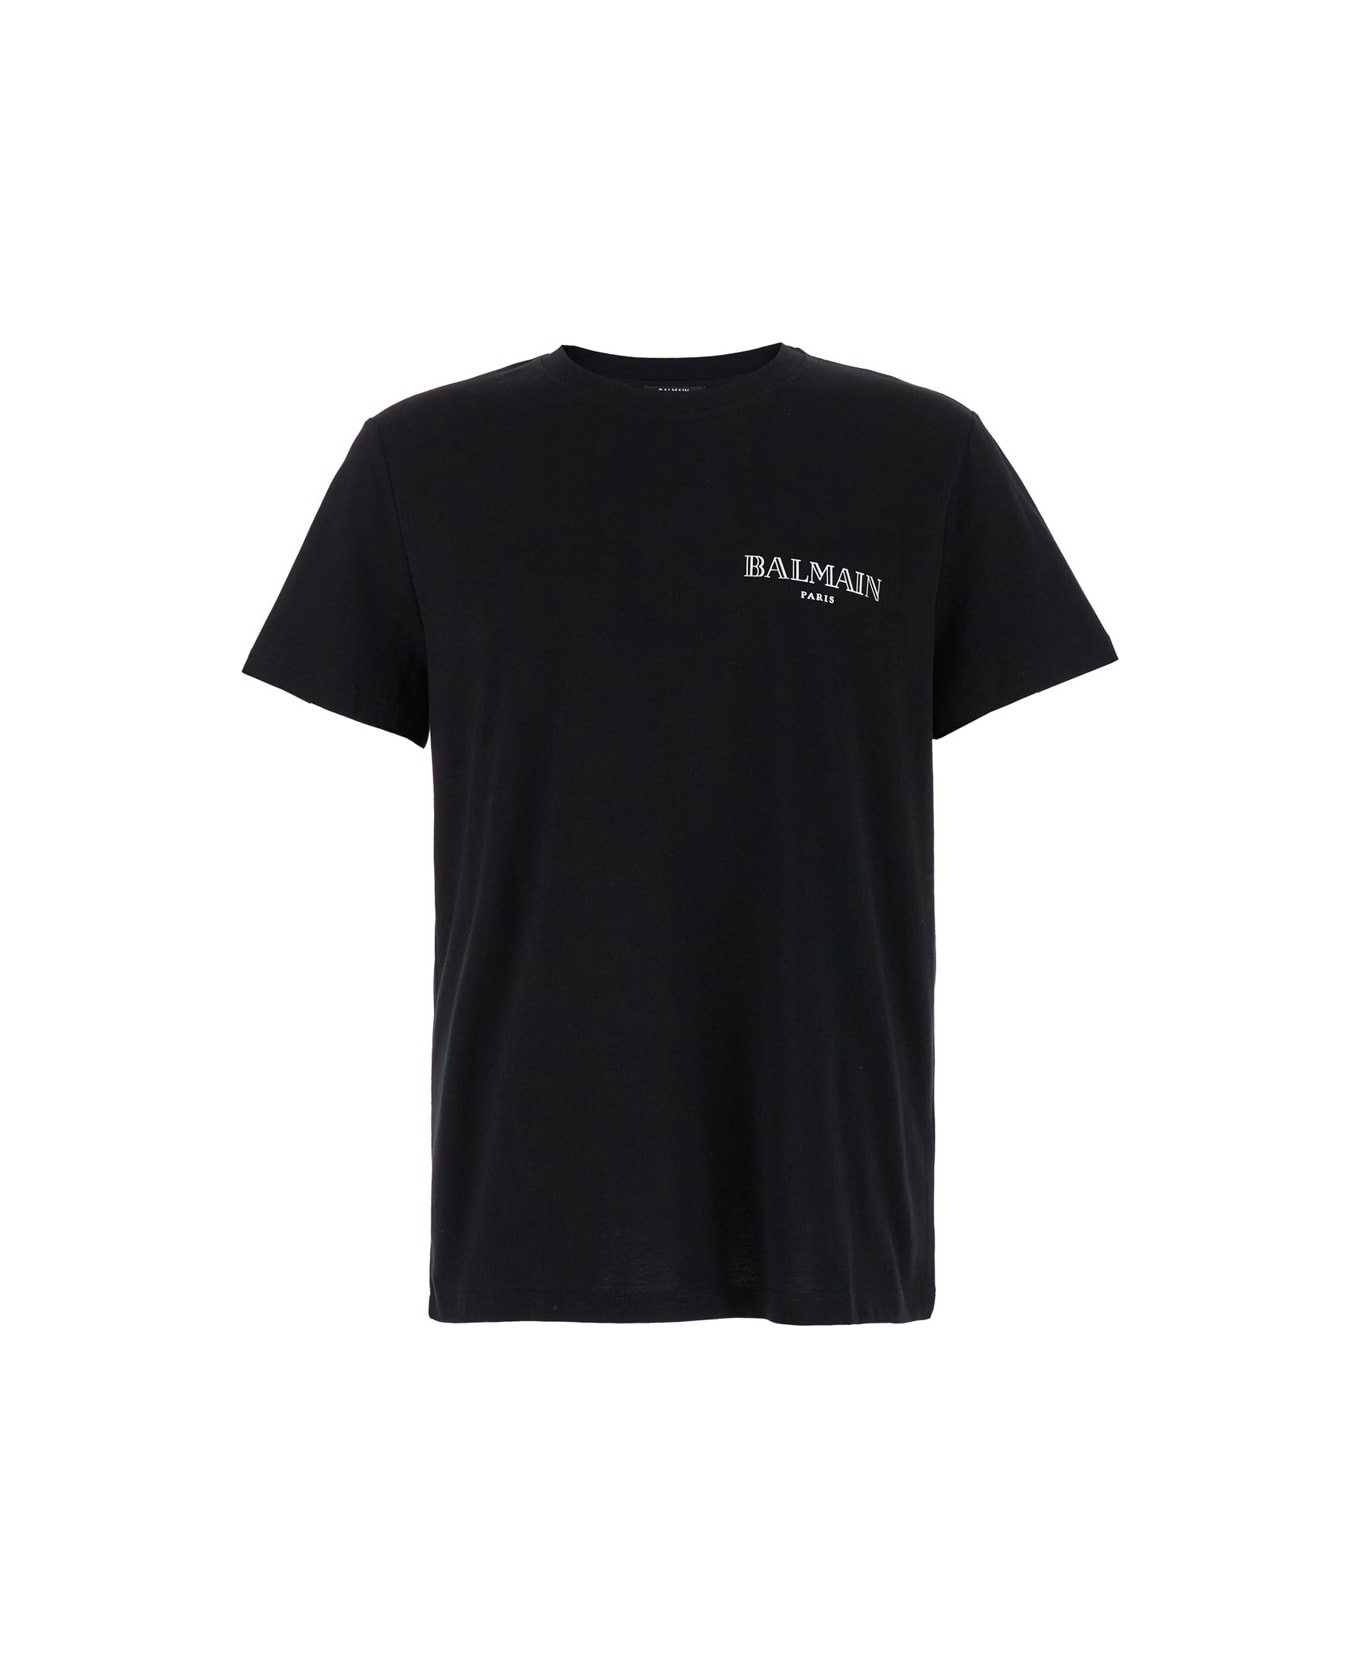 Balmain Silver Balmain Vintage T-shirt - Classic Fit - Black シャツ